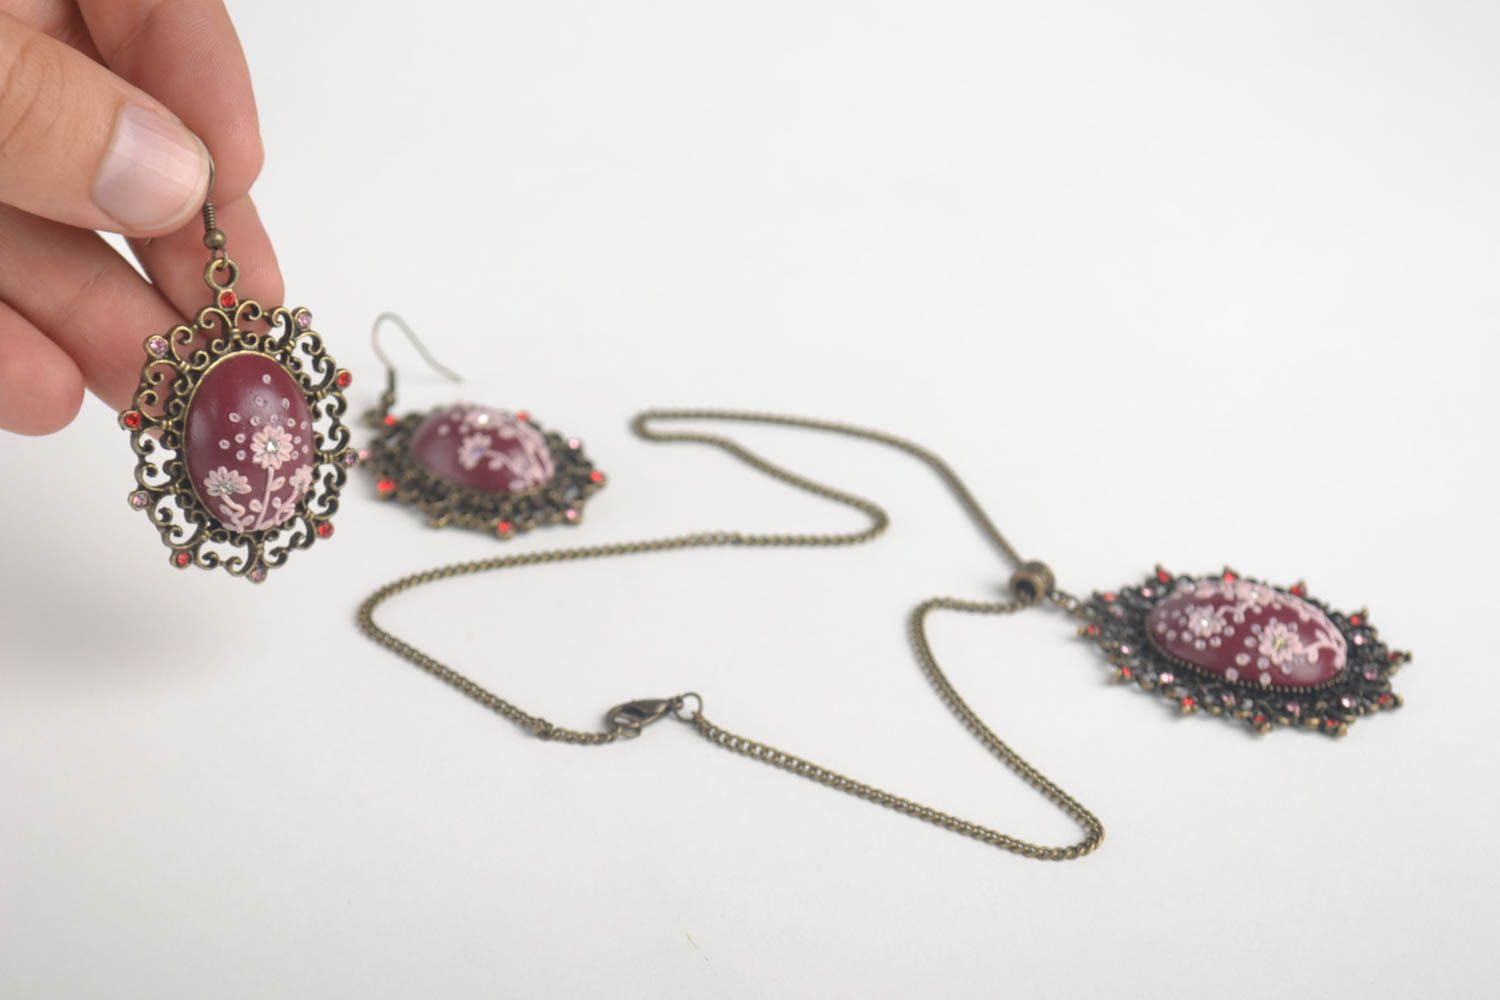 Handmade pendant handmade earrings polymer clay jewelry unusual gift for girl photo 5